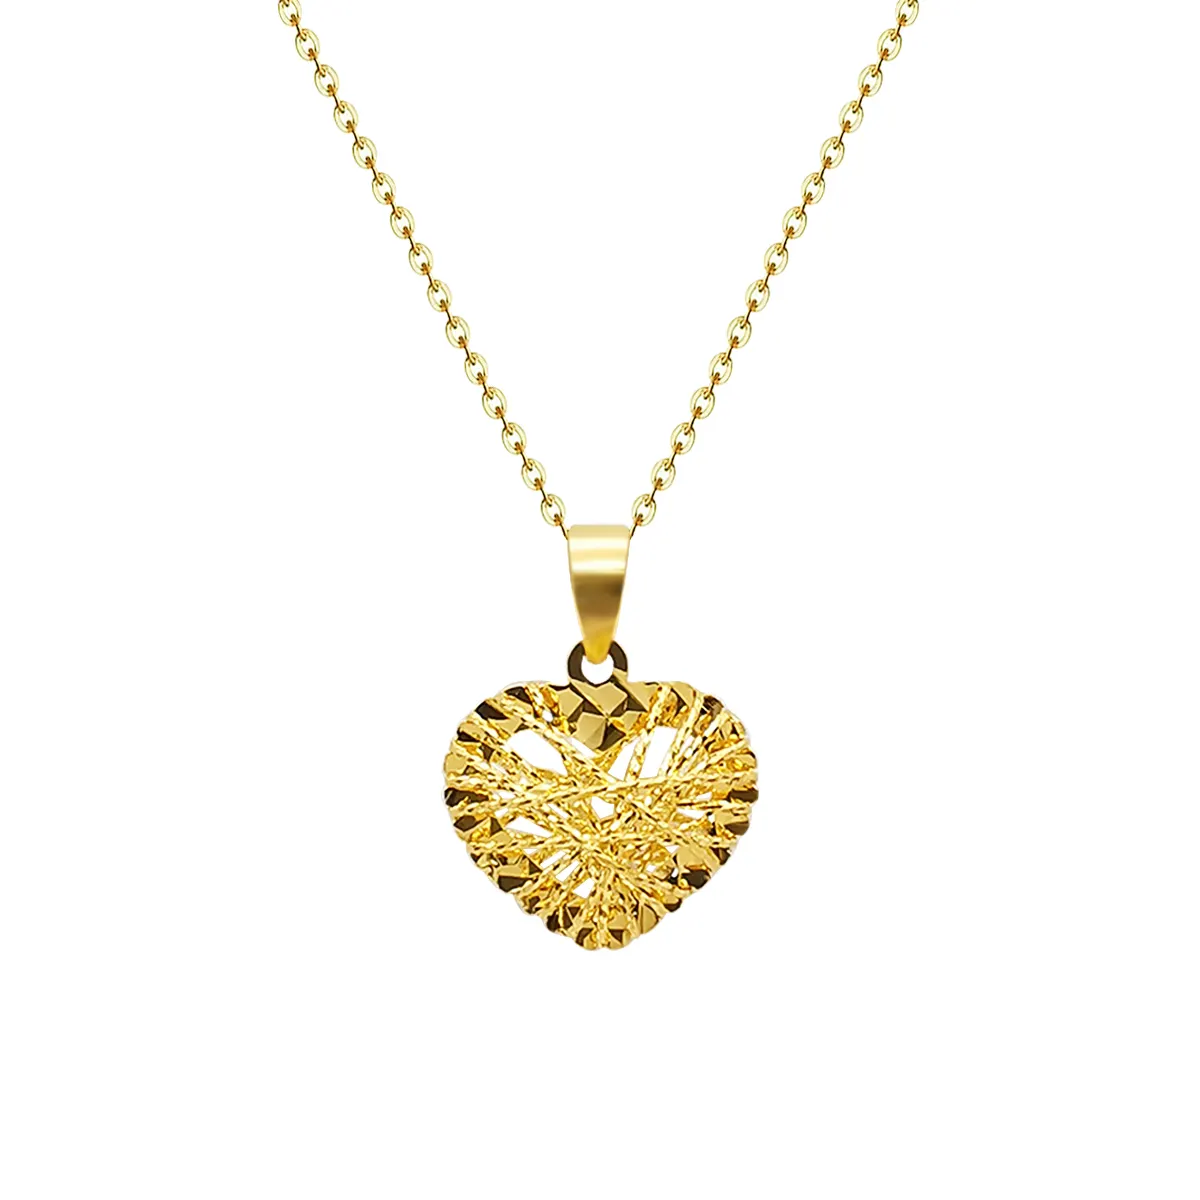 Collier en or véritable 18k, bijoux or jaune, pendentif en forme de cœur, chaînes en or